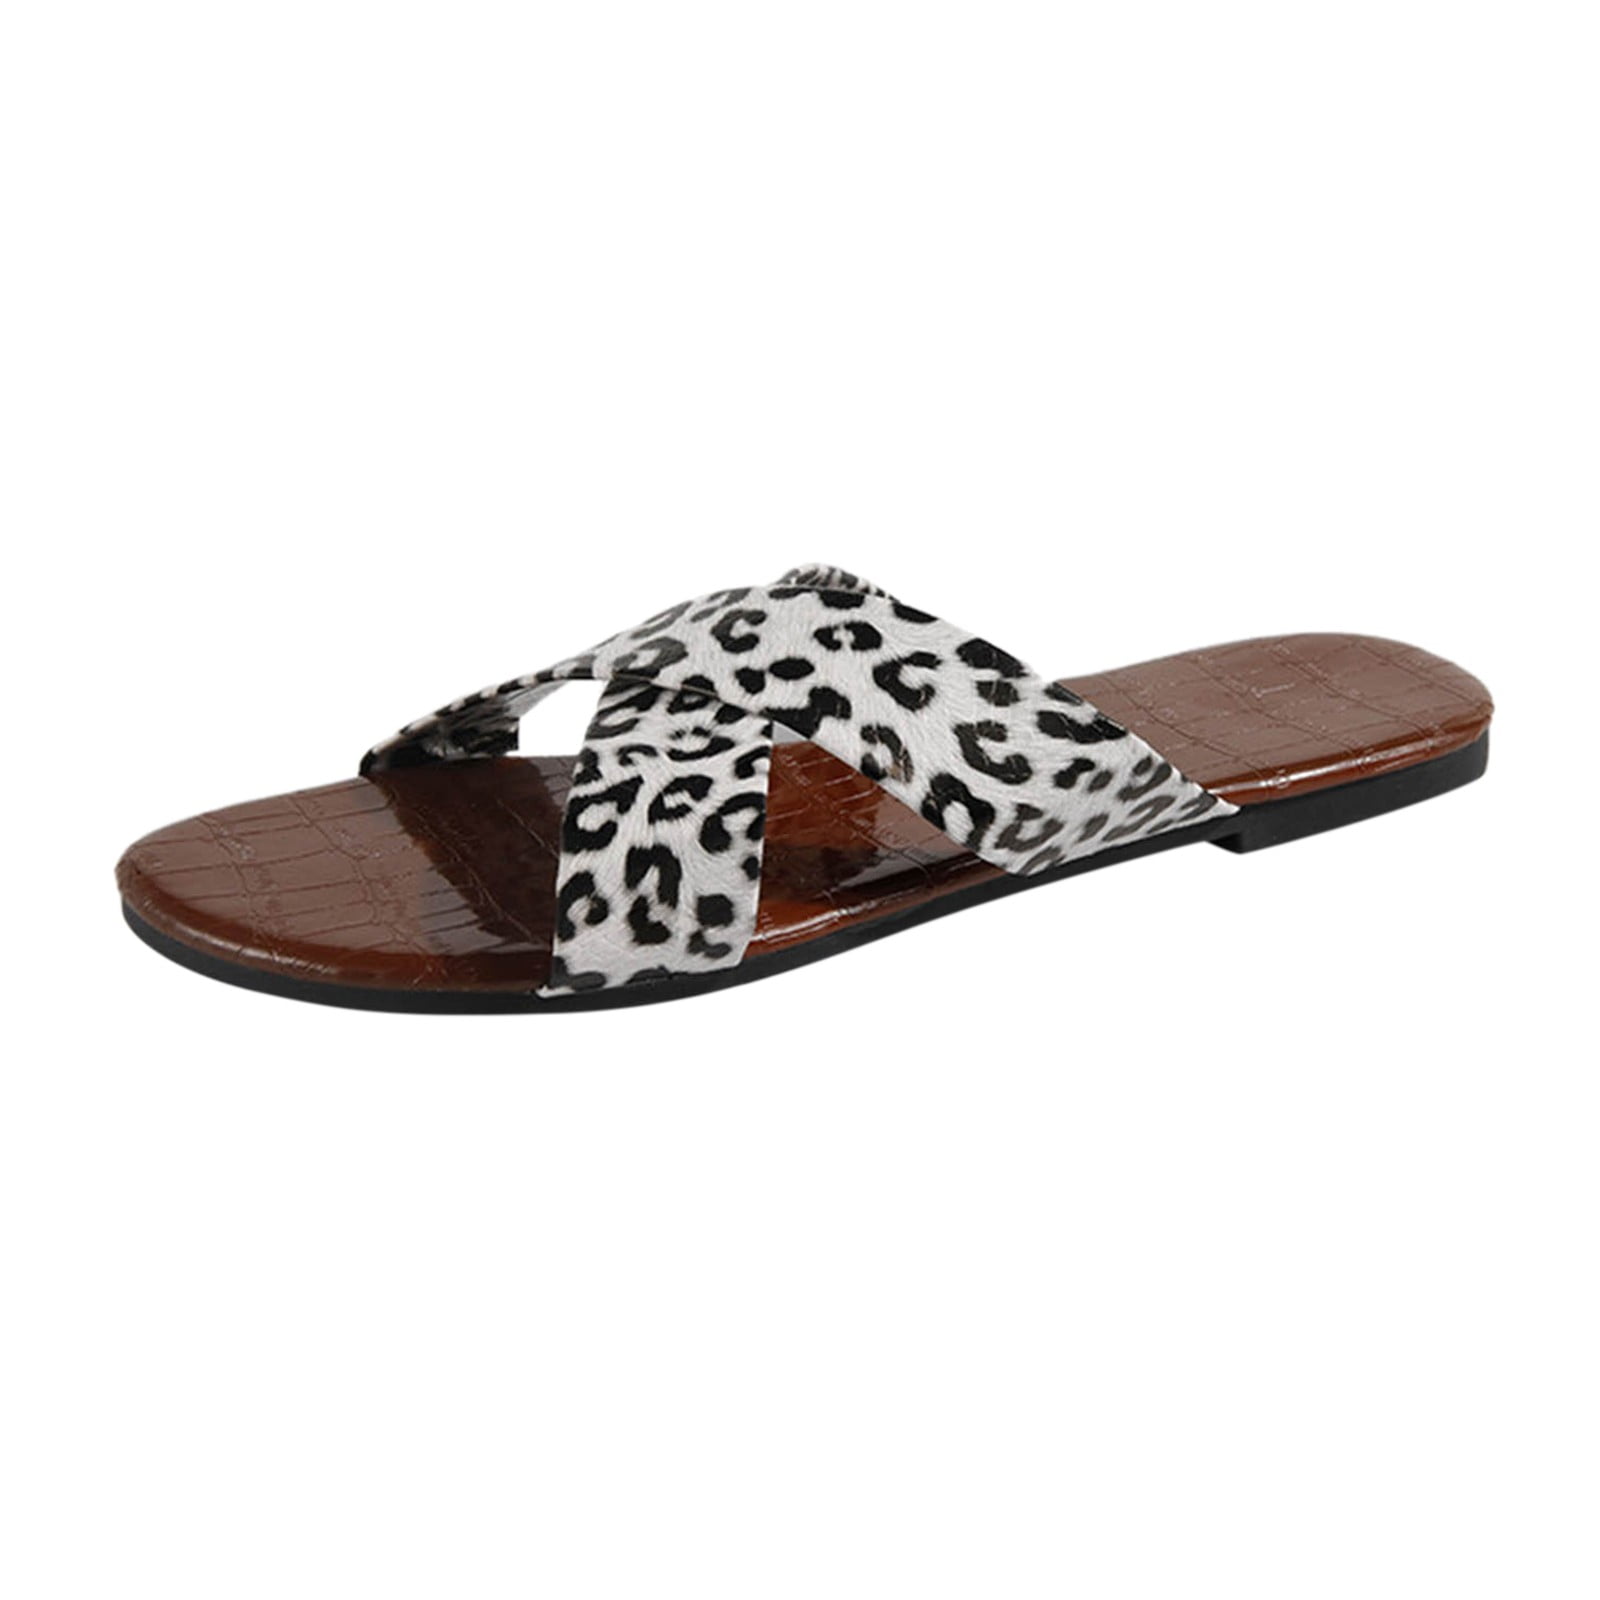 Boohoo Leopard Print Woman Slides in Black Womens Shoes Flats and flat shoes Flat sandals 